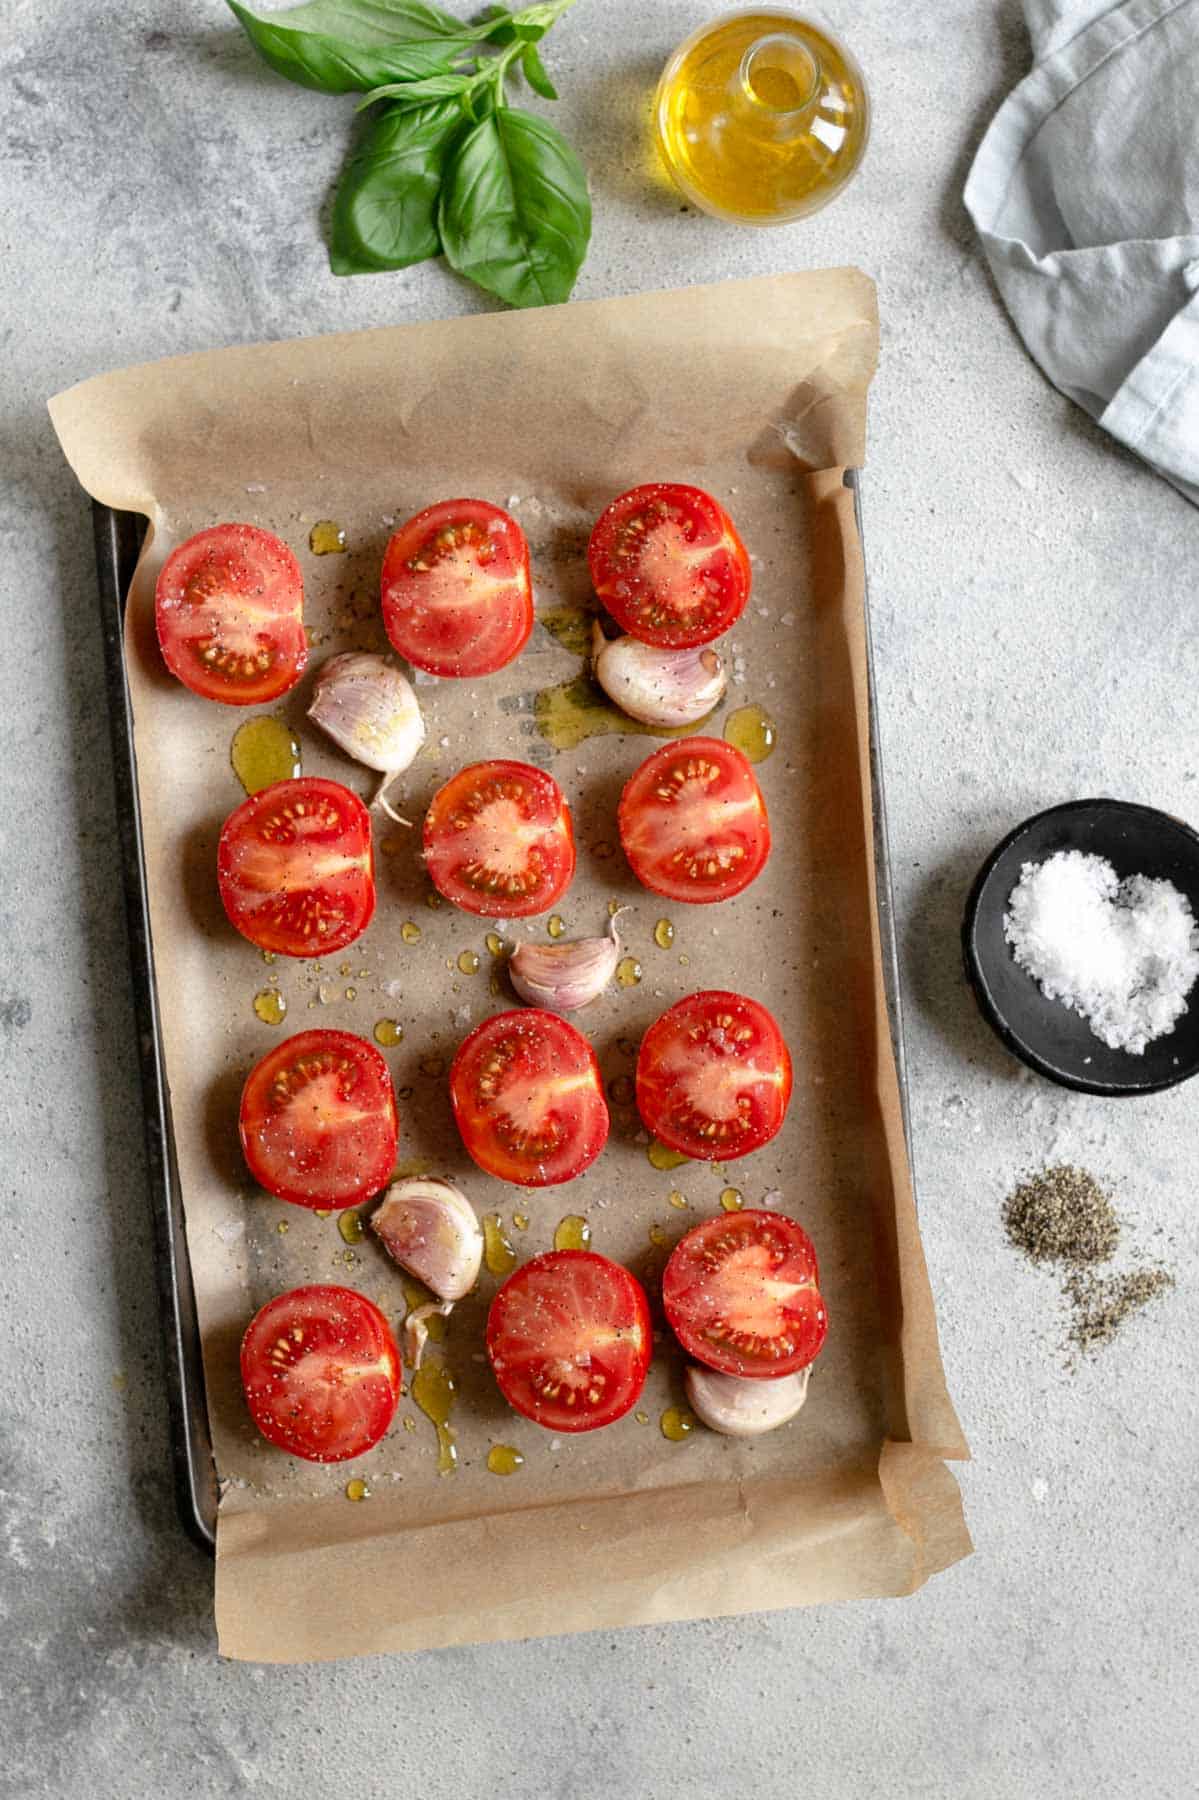 Sweet and juicy tomatoes for bucatini pasta #roastedtomatoes #pastarecipe